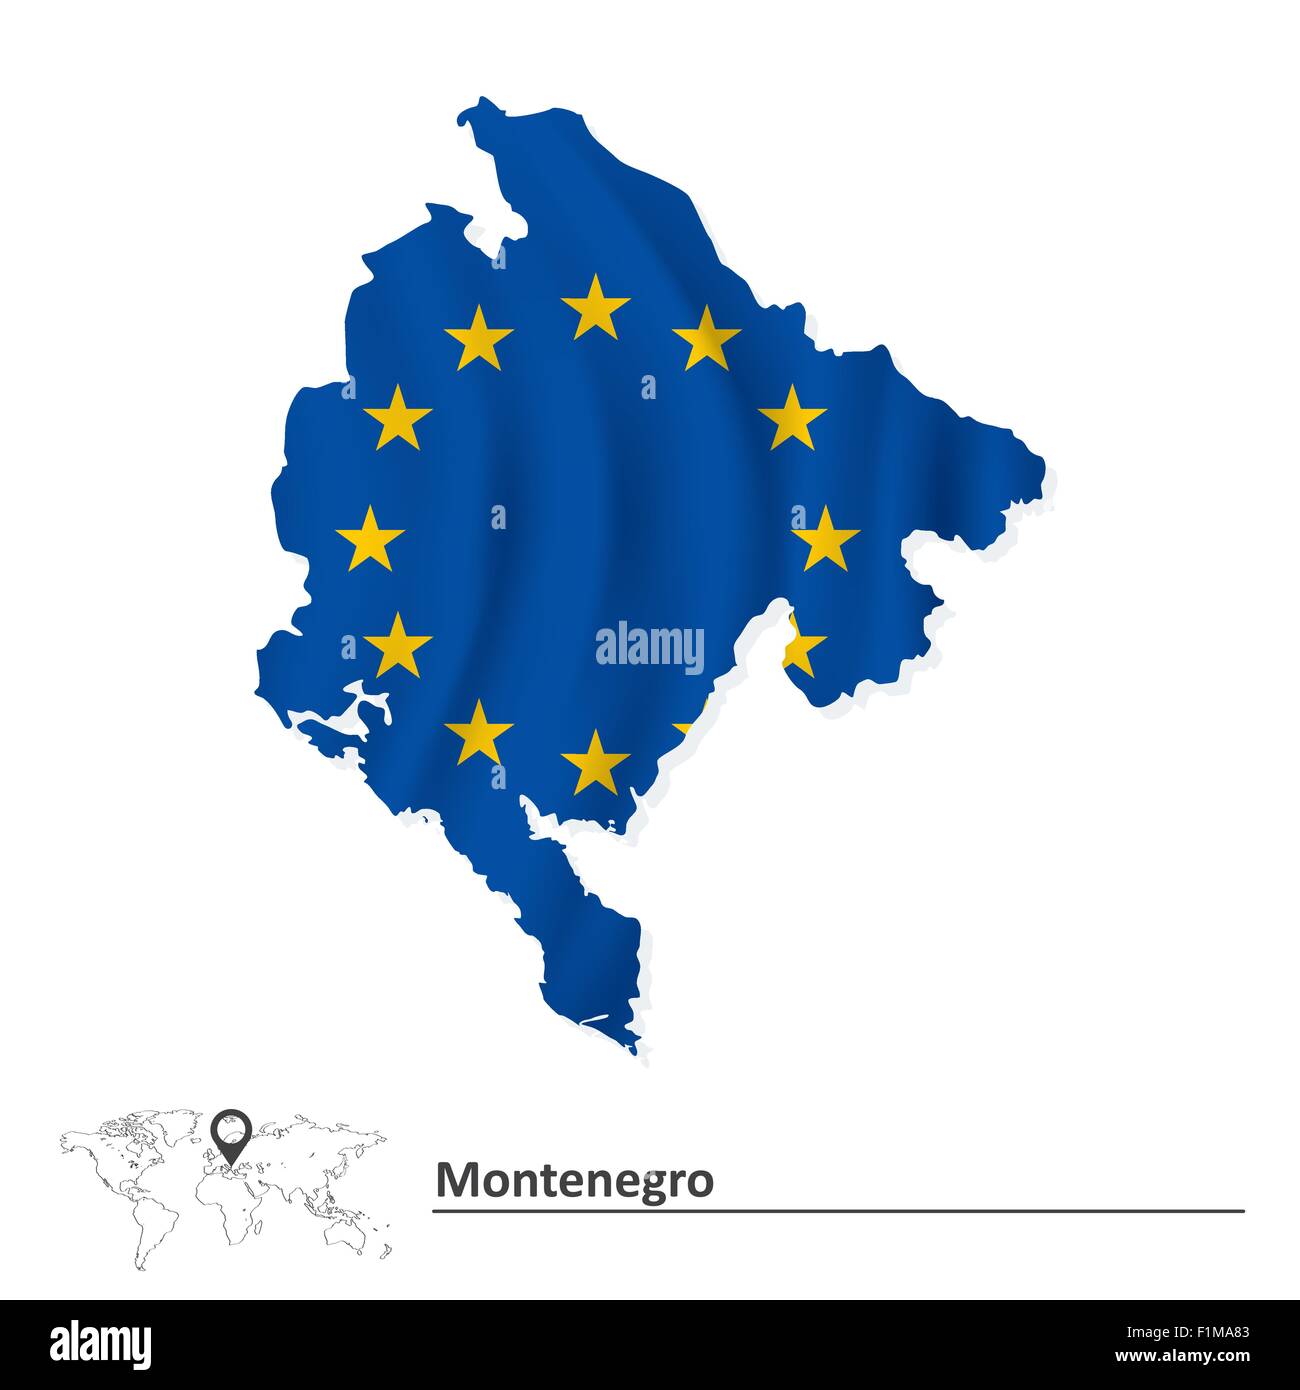 Karte von Montenegro mit EU-Flagge - Vektor-illustration Stock Vektor